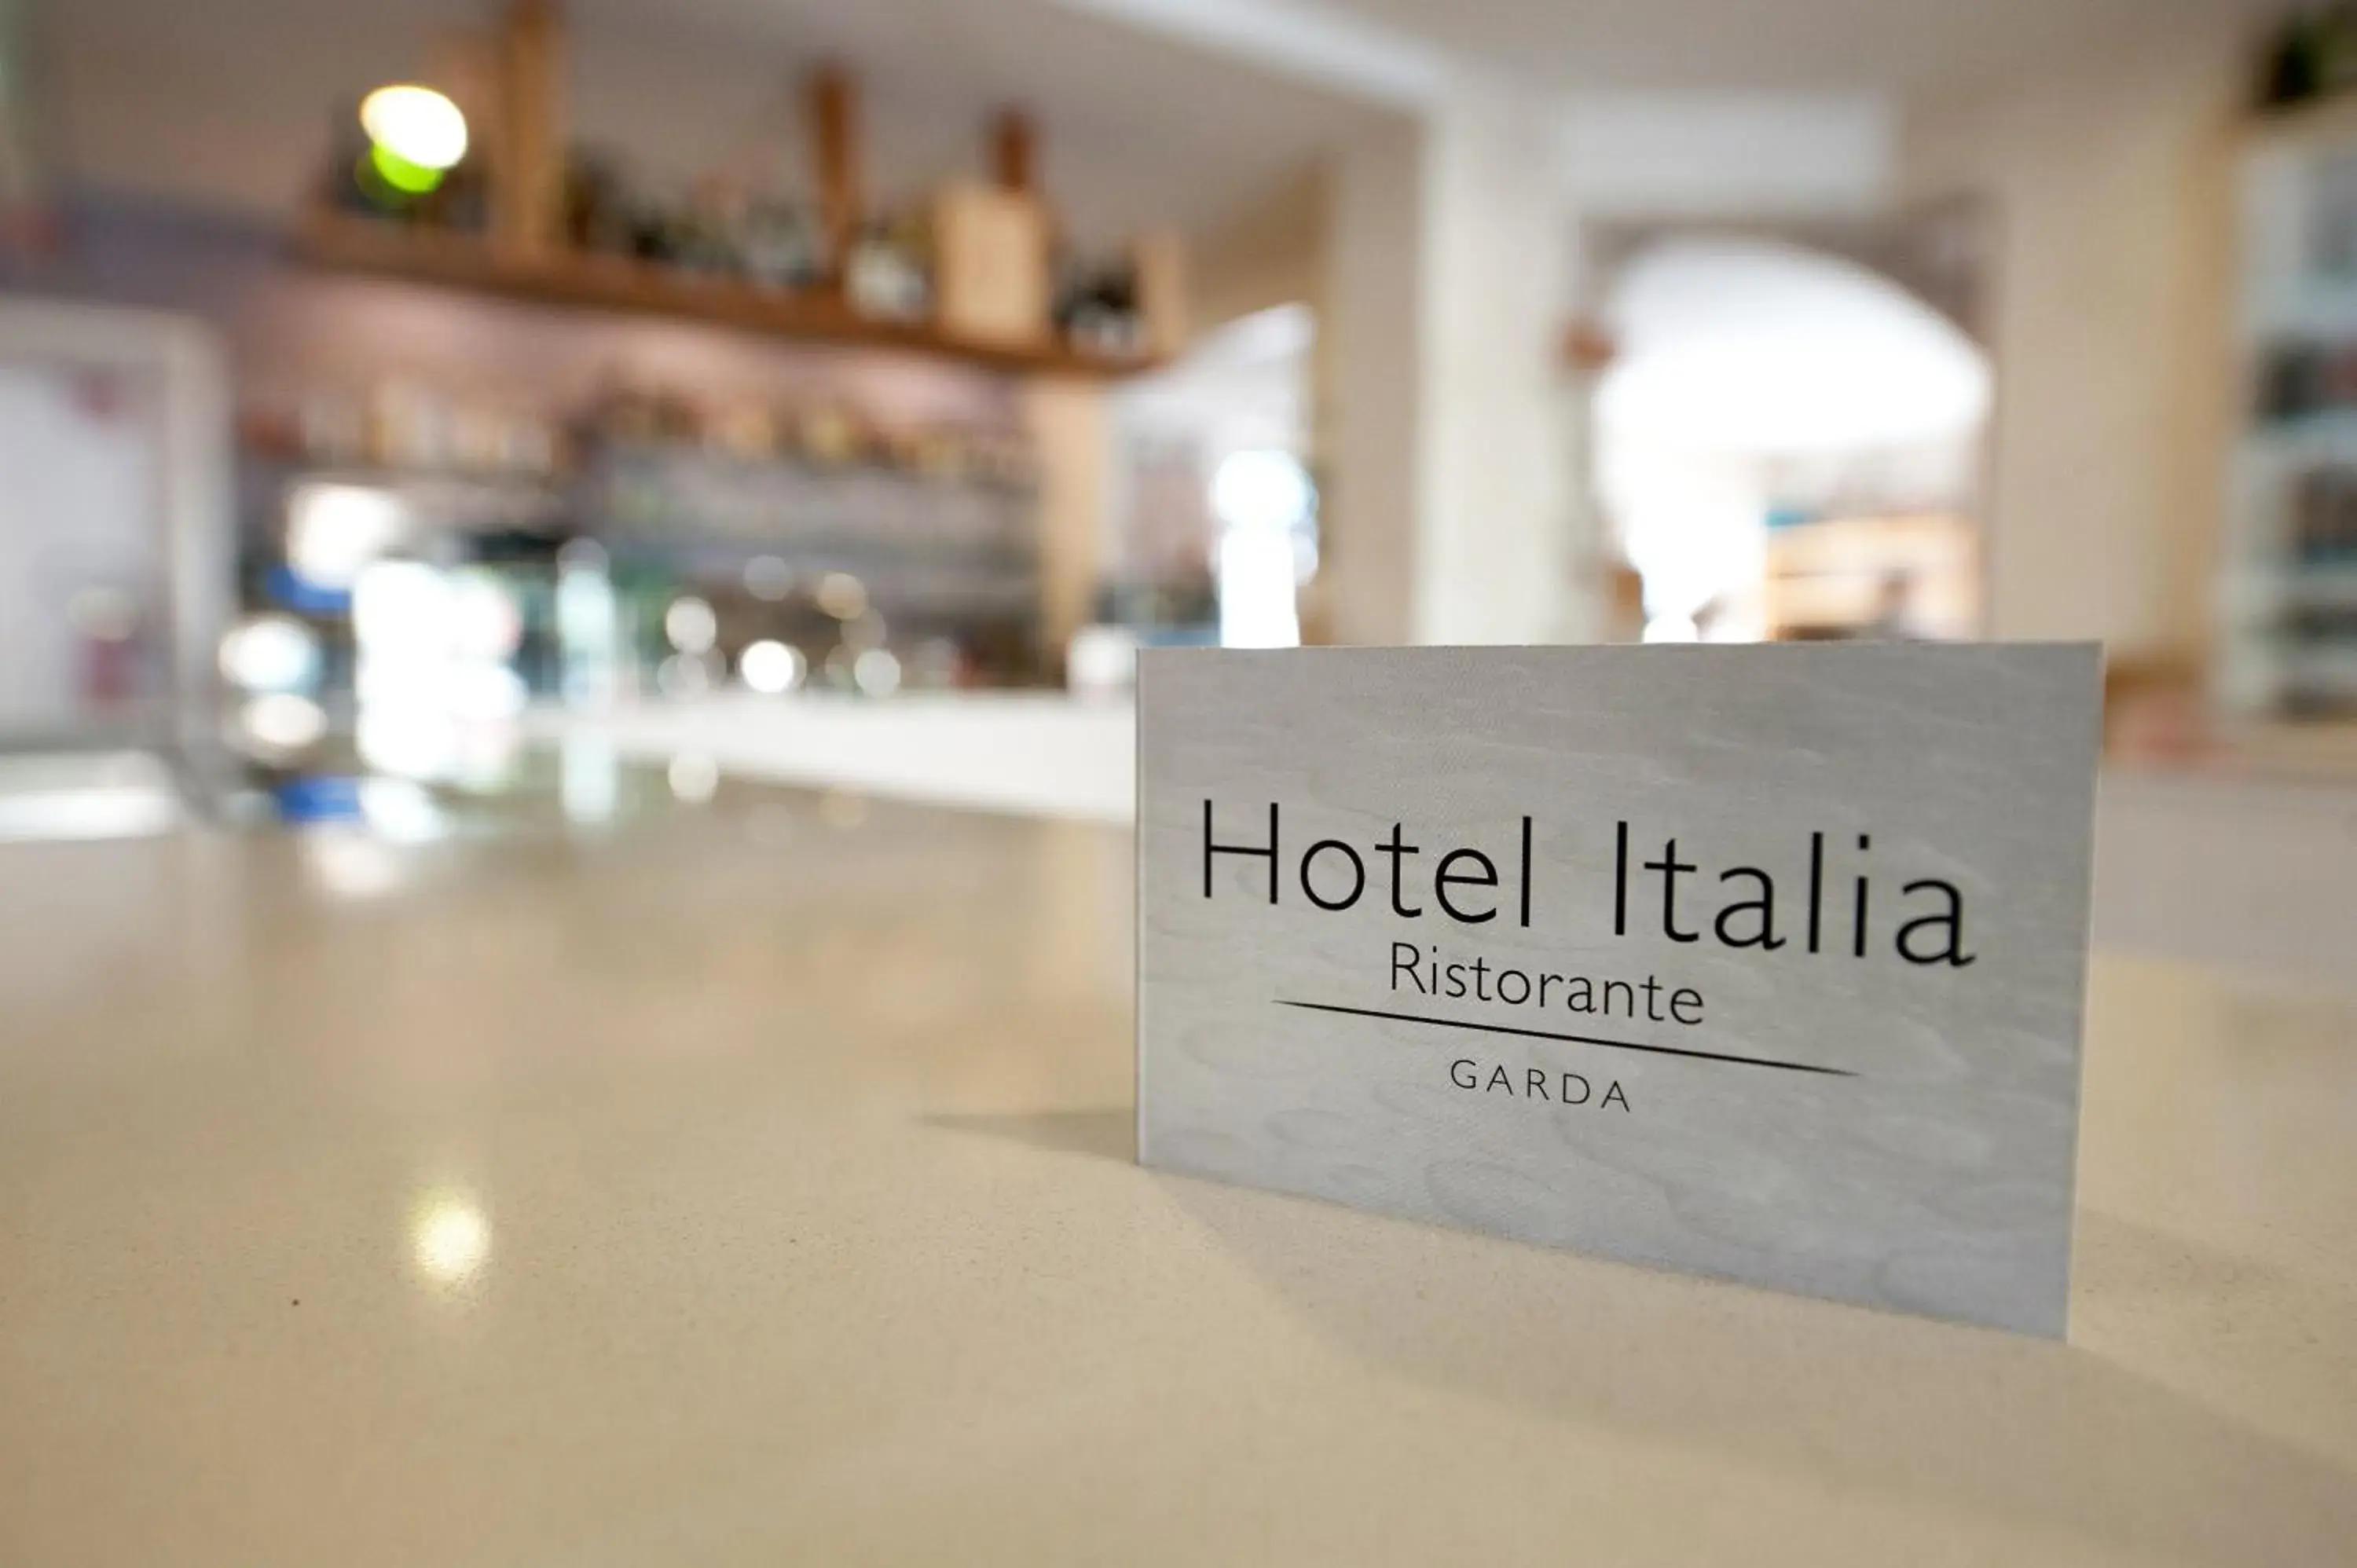 Restaurant/places to eat in Hotel Italia